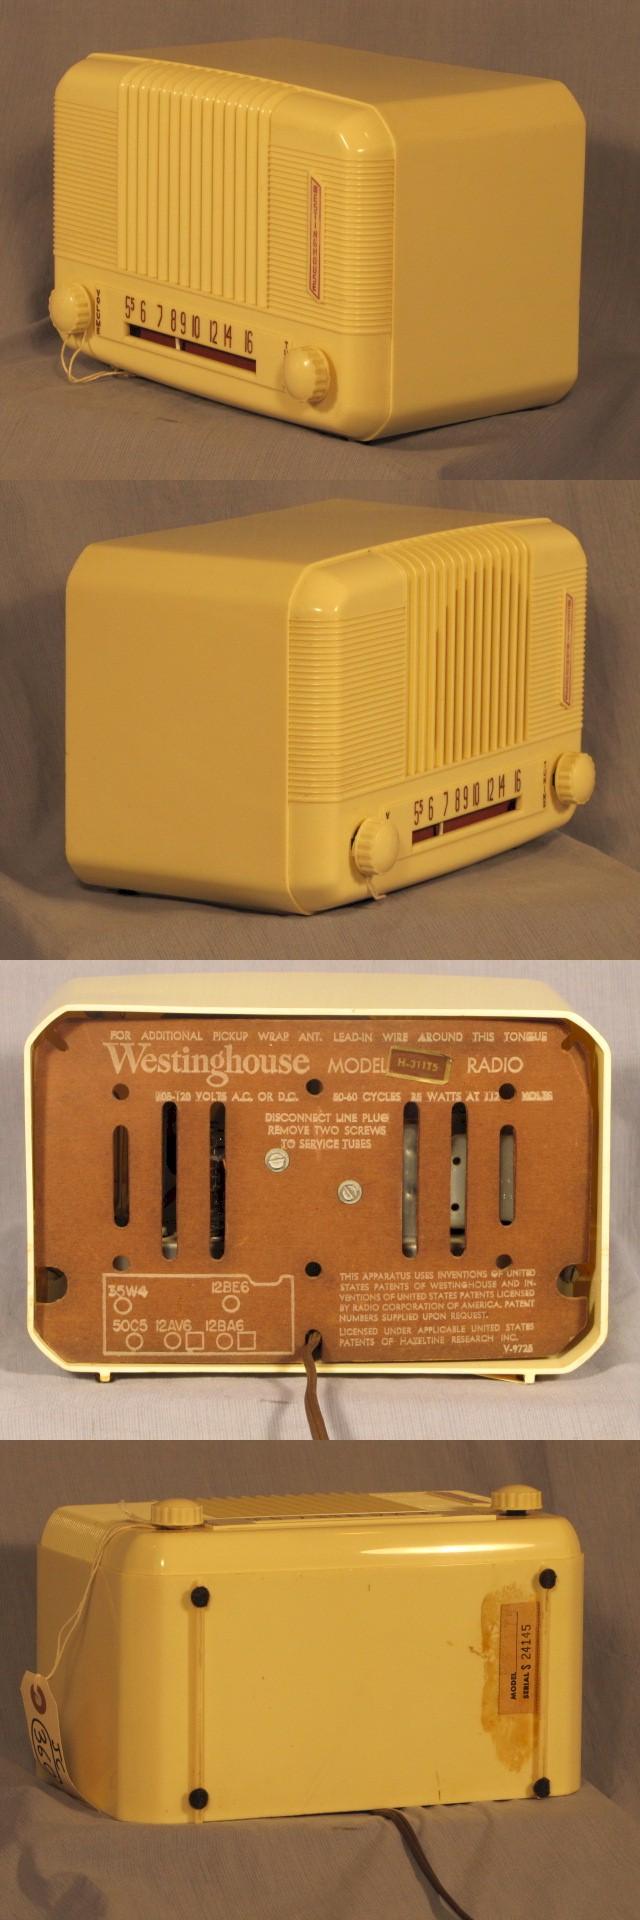 Westinghouse H-311T5 (1950s)